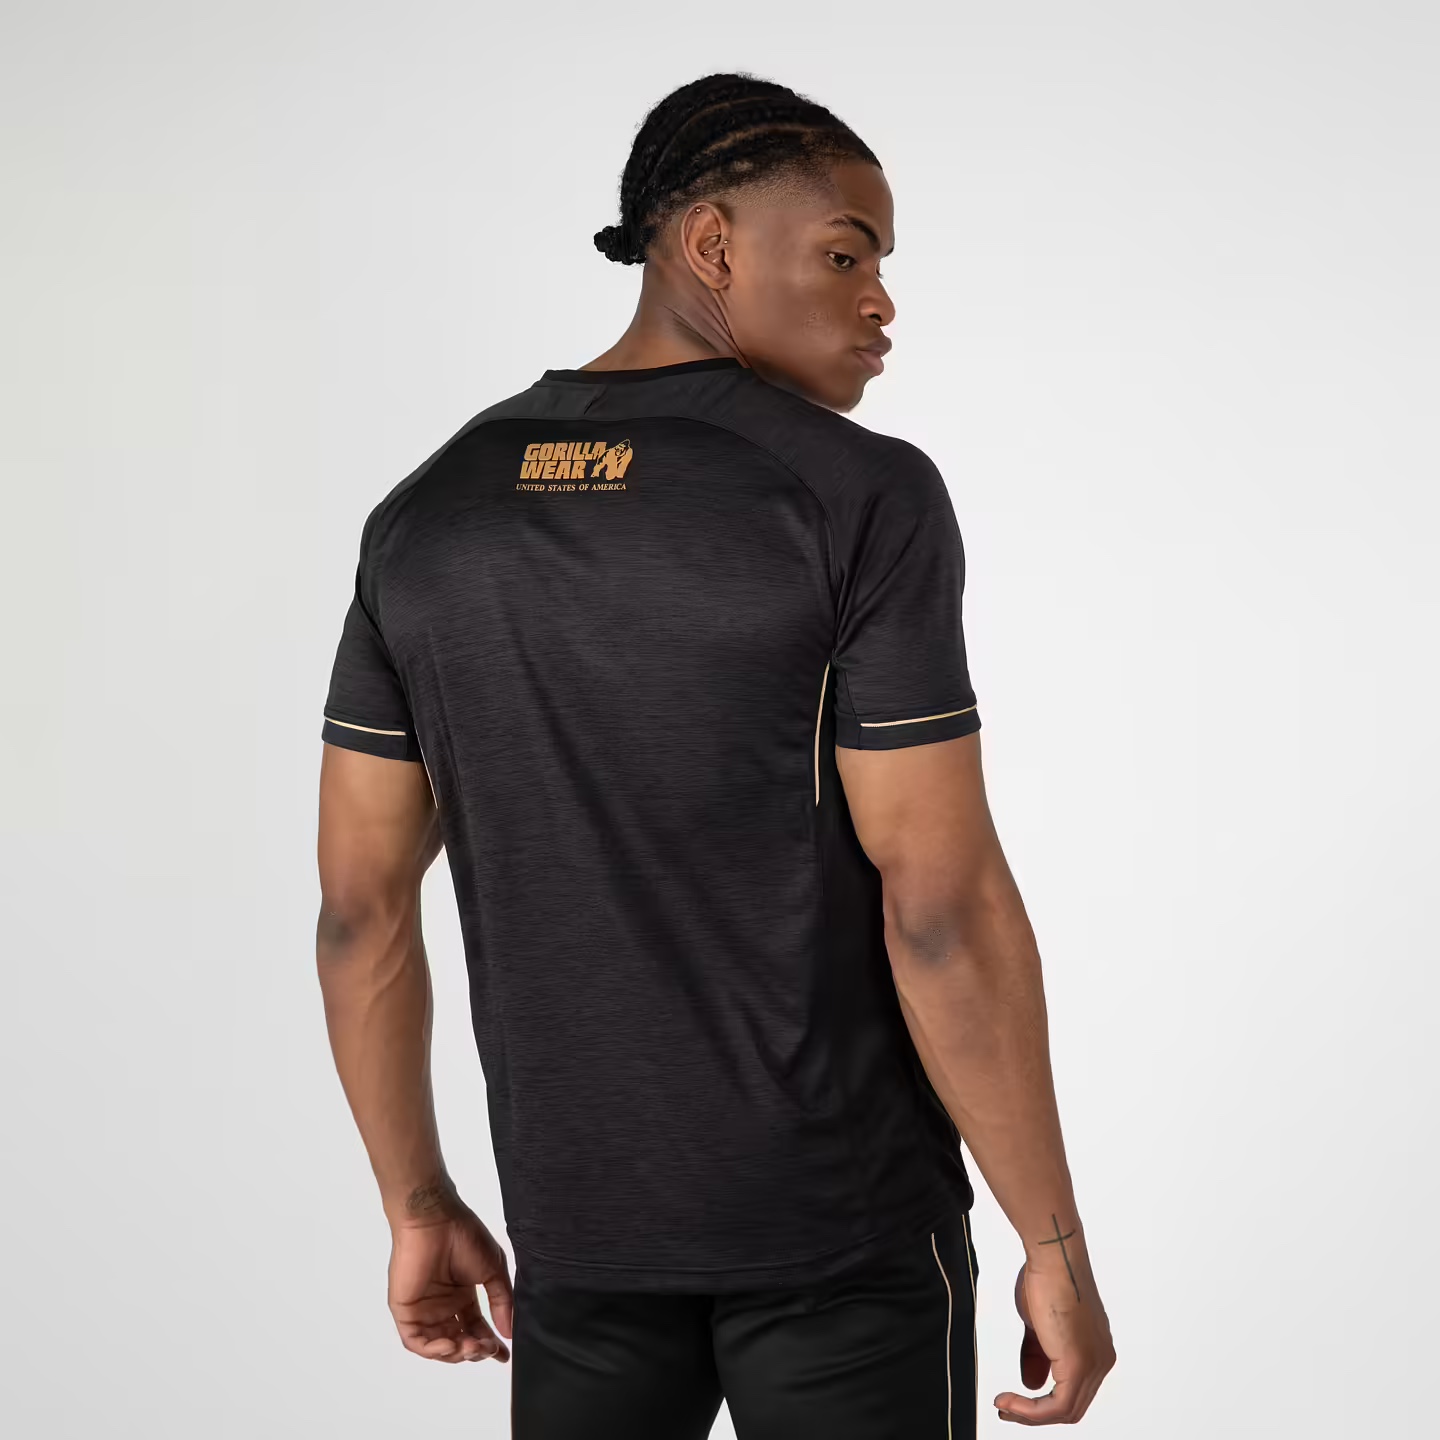 Gorilla Wear - Fremont  T-Shirt black/gold